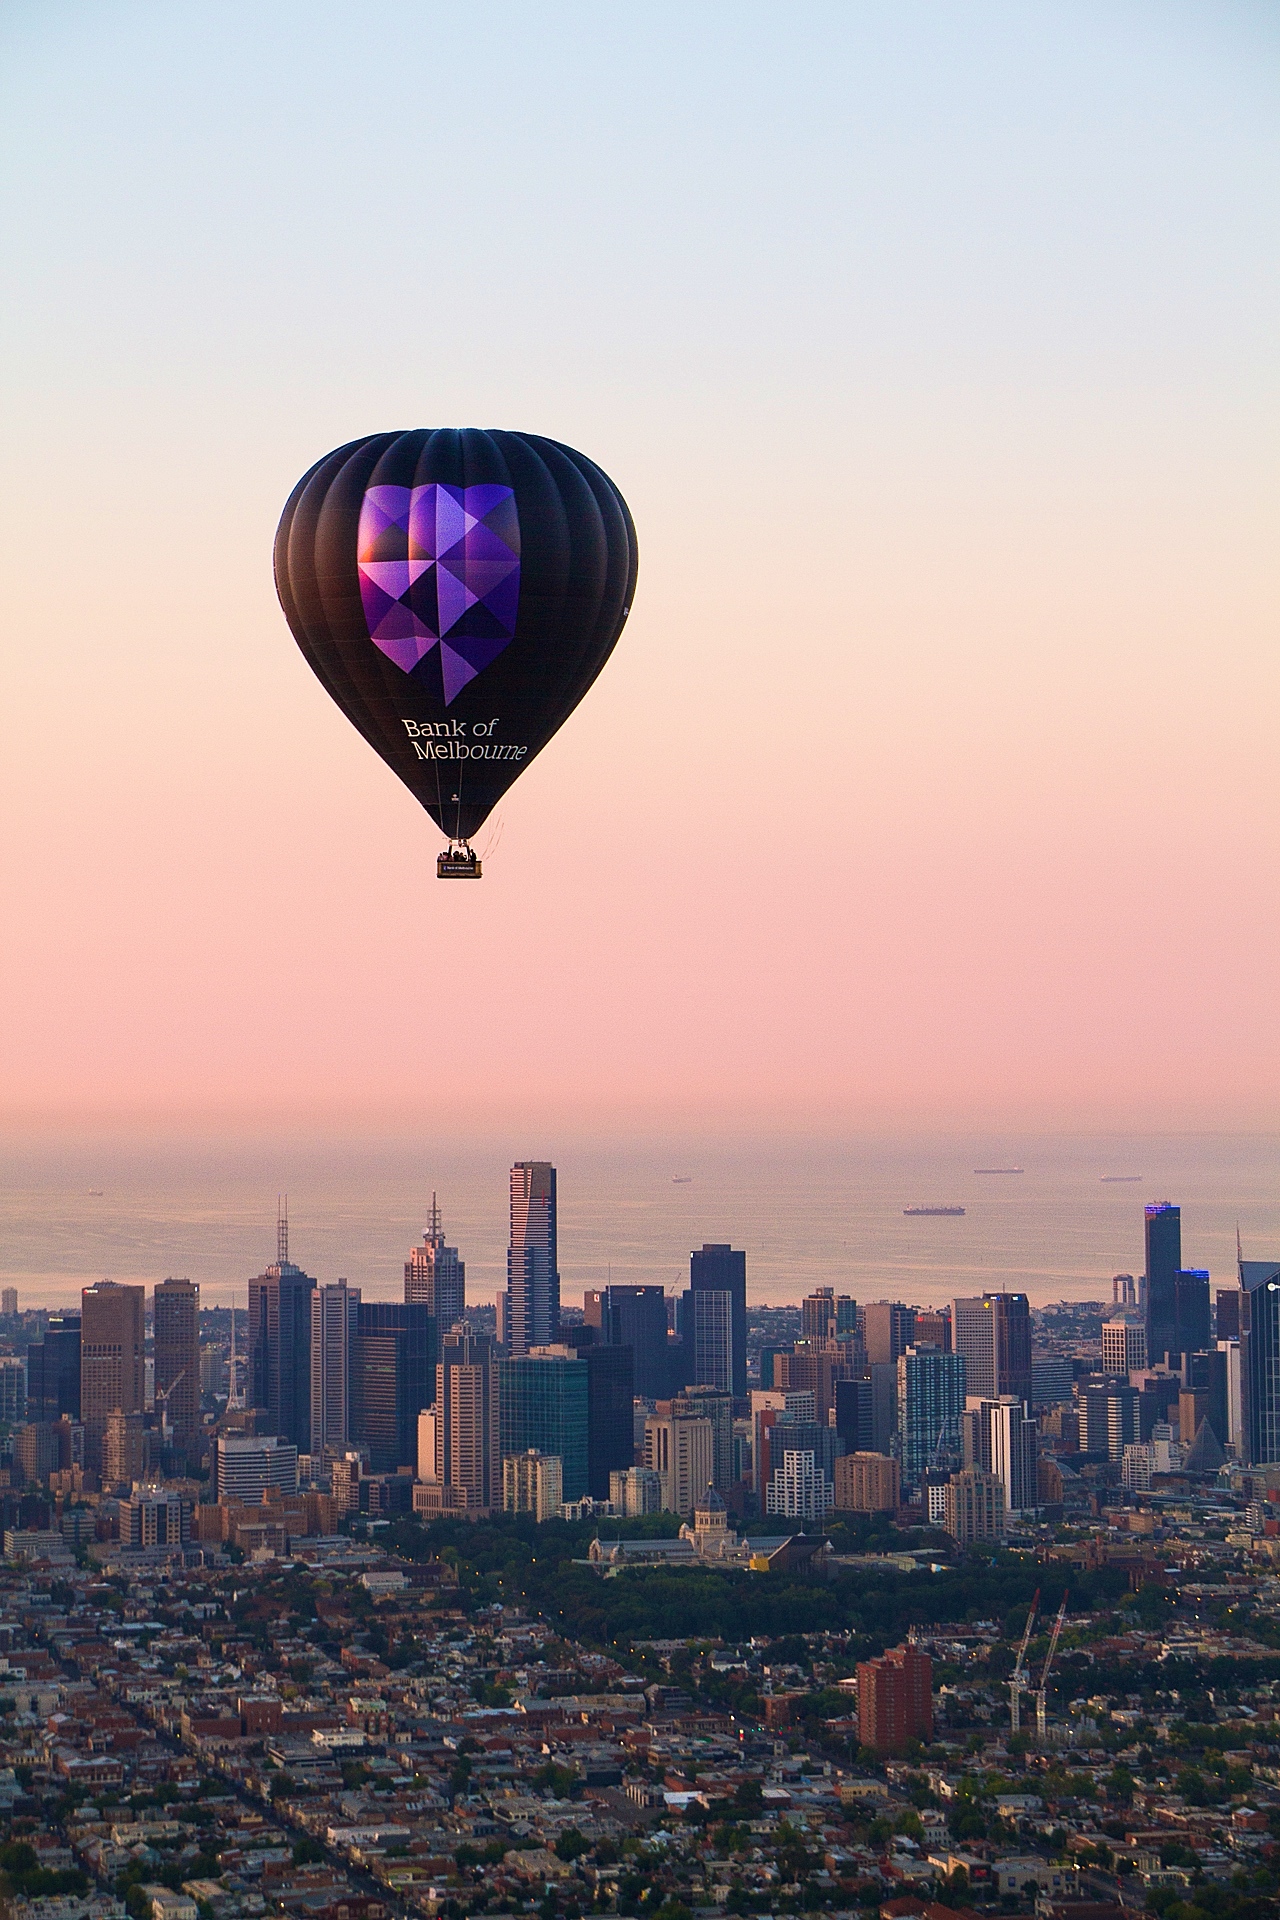 Bank of Melbourne hot air balloon over Melbourne 1.jpeg